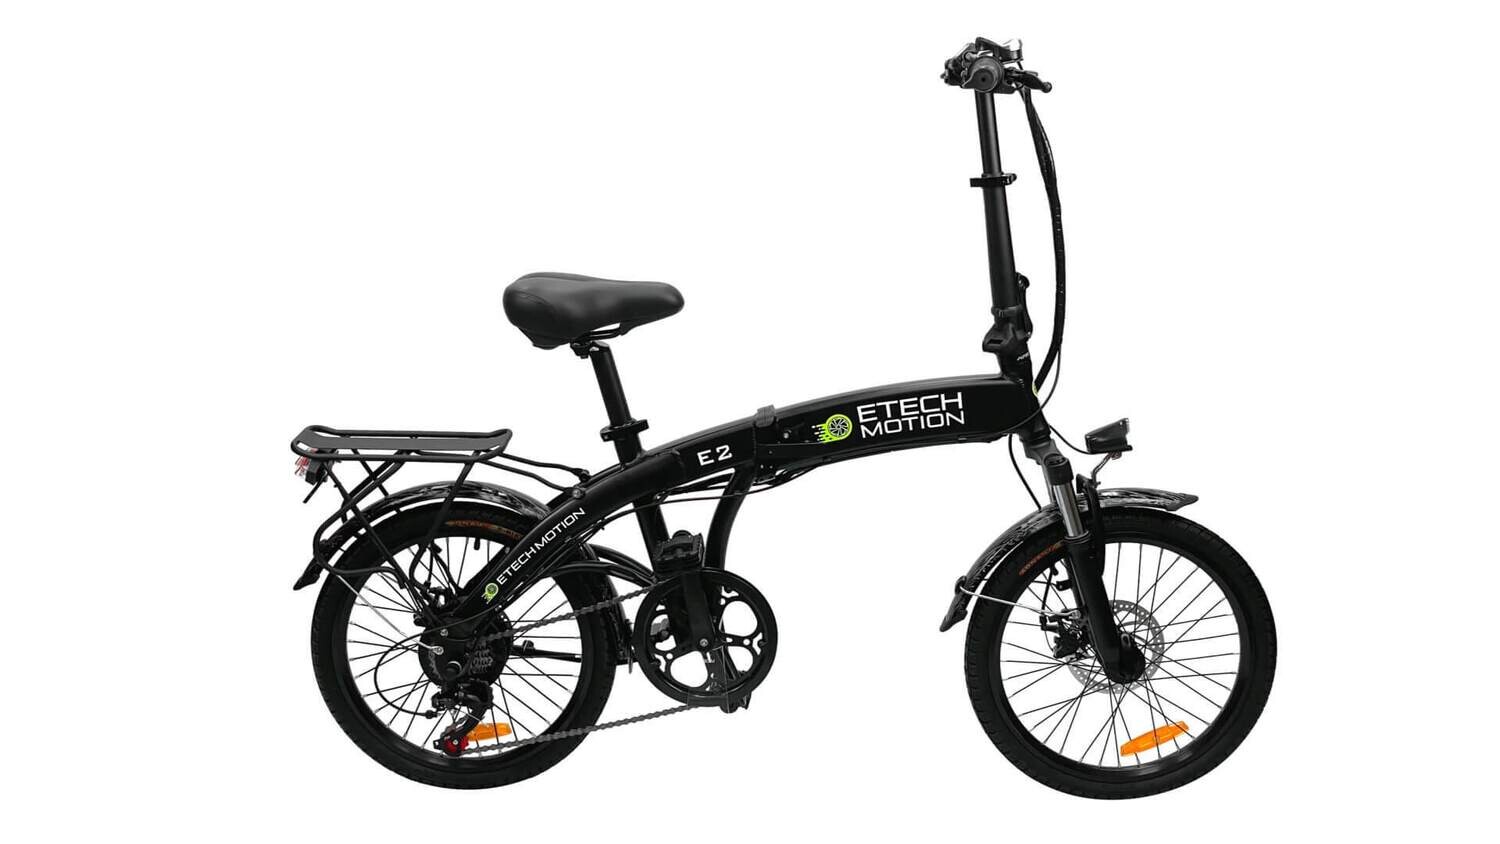 ETECH MOTION E2 Electric Bike Lightweight Folding City eBike